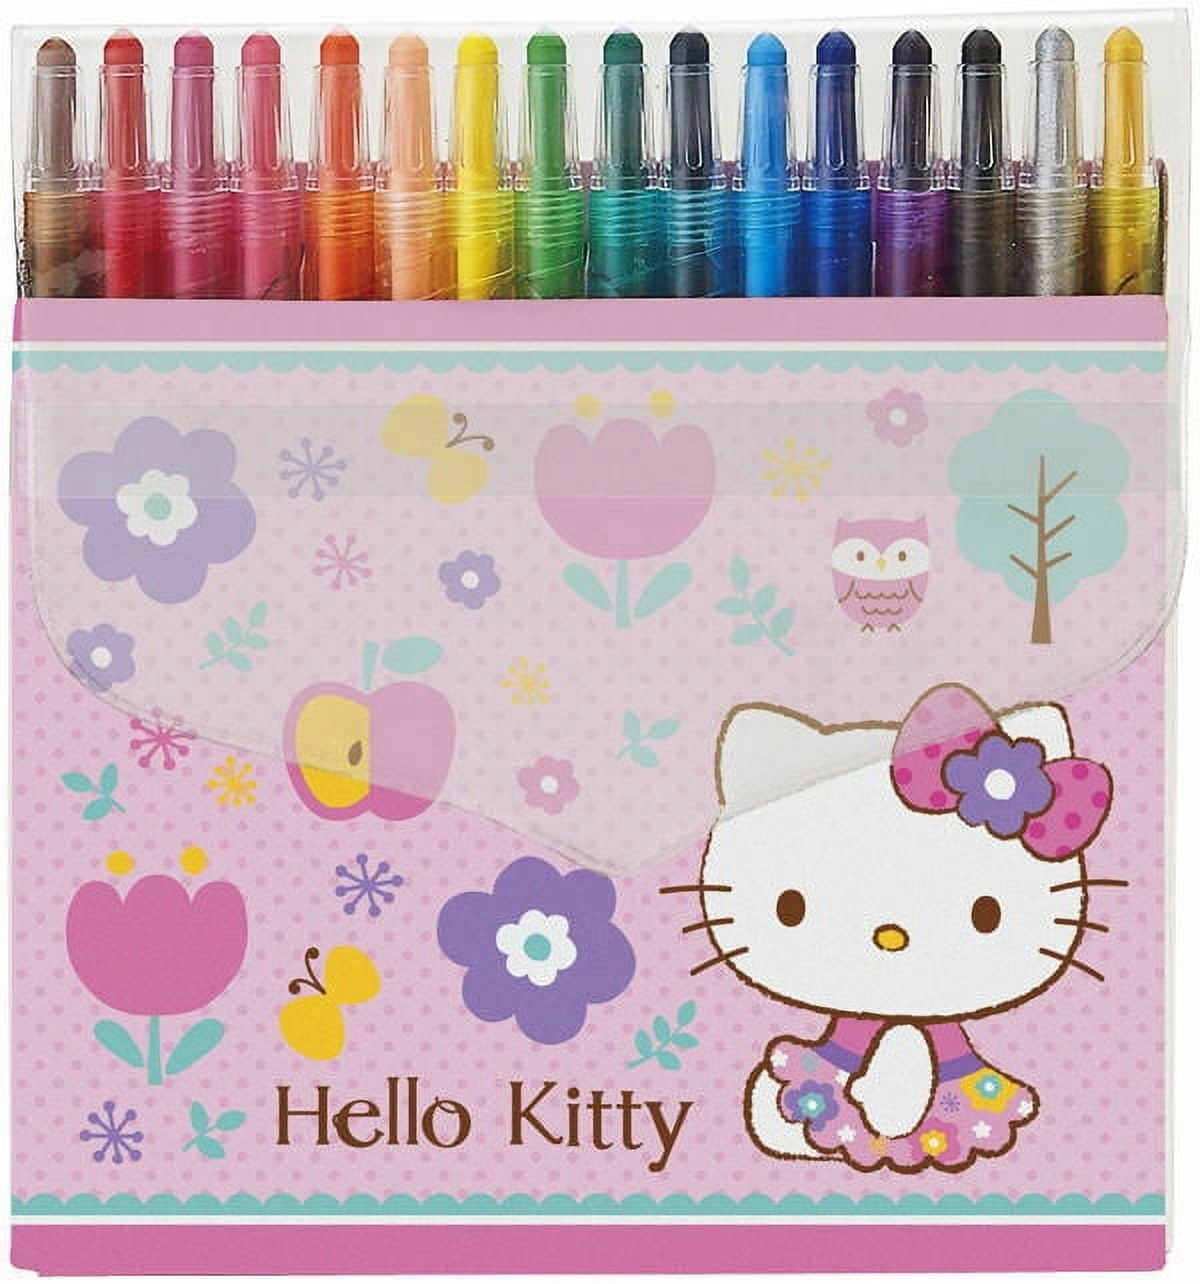 Hello Kitty Colorful Graffiti 16 Colors Twist Up Crayons Set